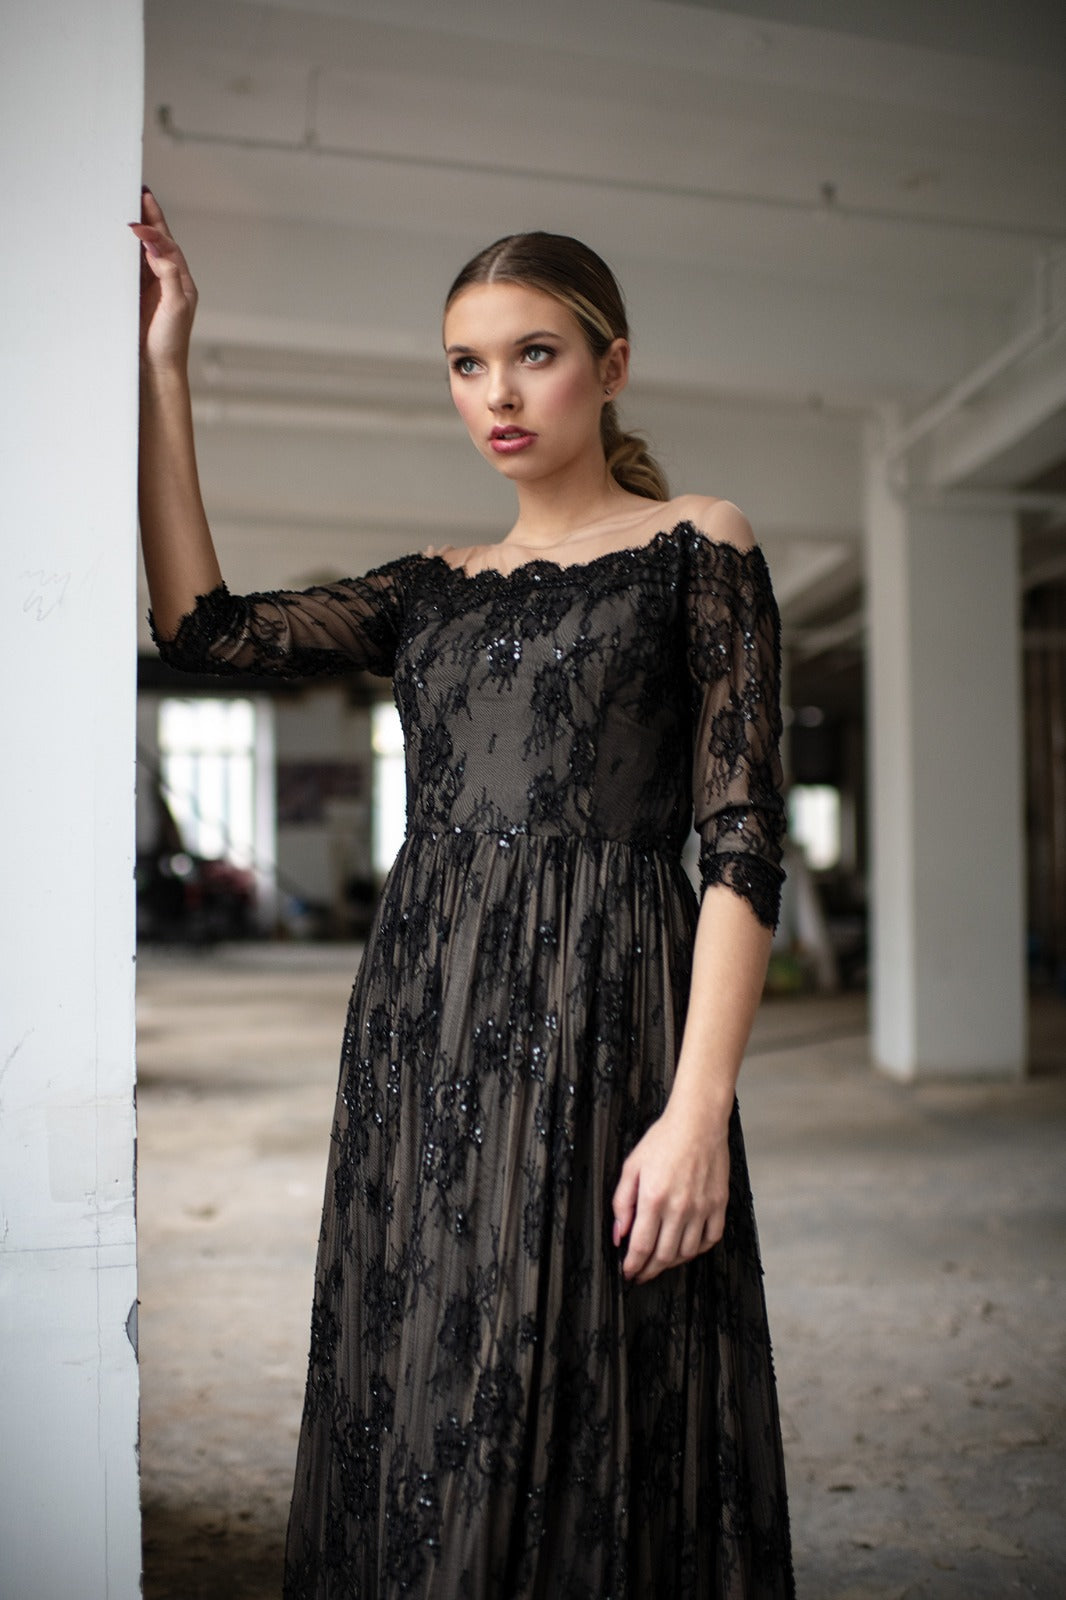 Long Chantilly lace bustier dress Woman, Black